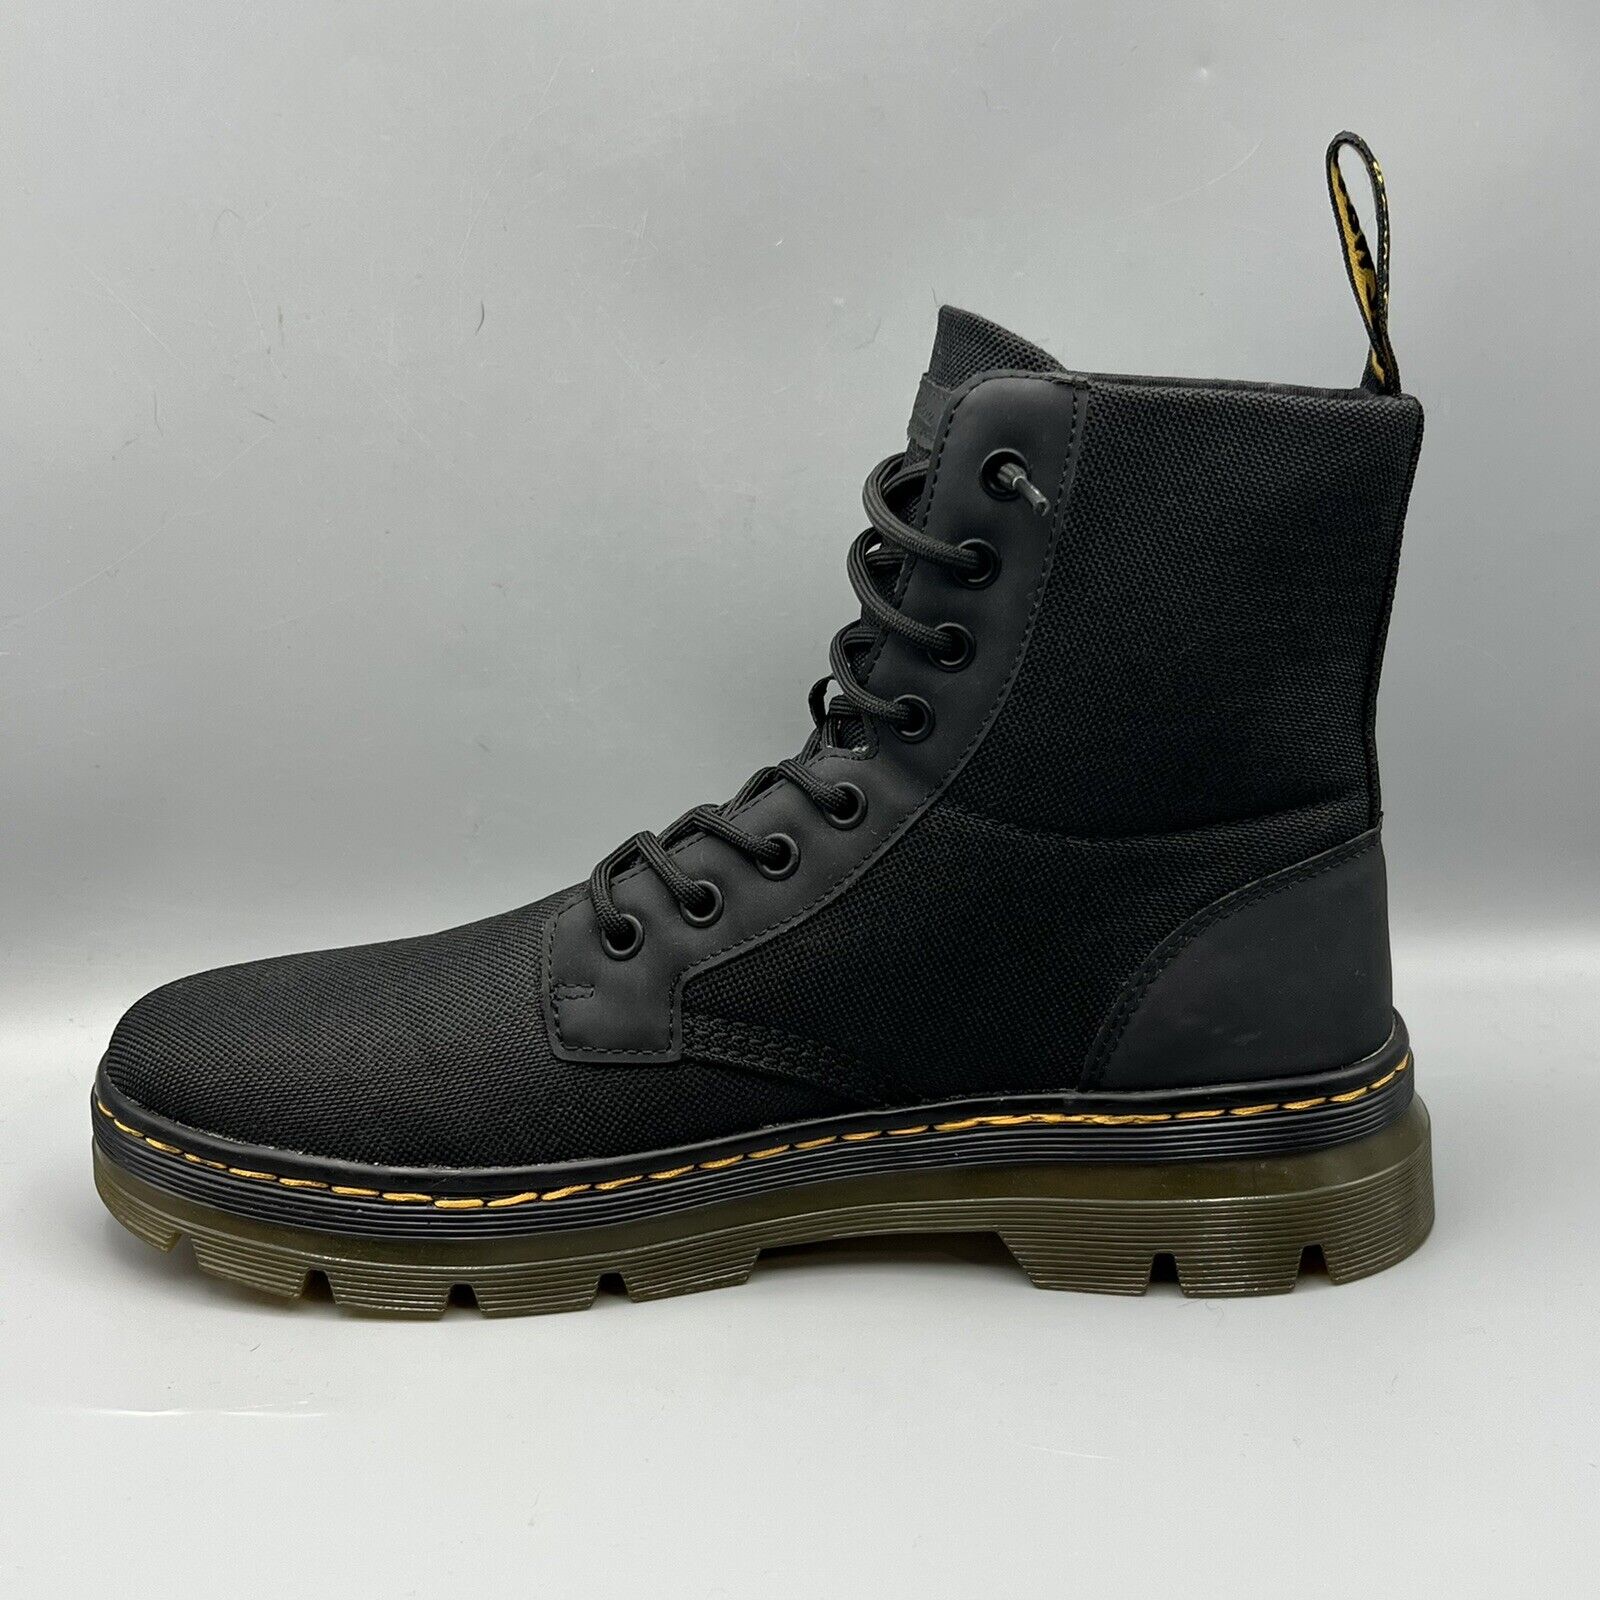 Dr. Martens AW004 Leather Boots - Black for sale online | eBay